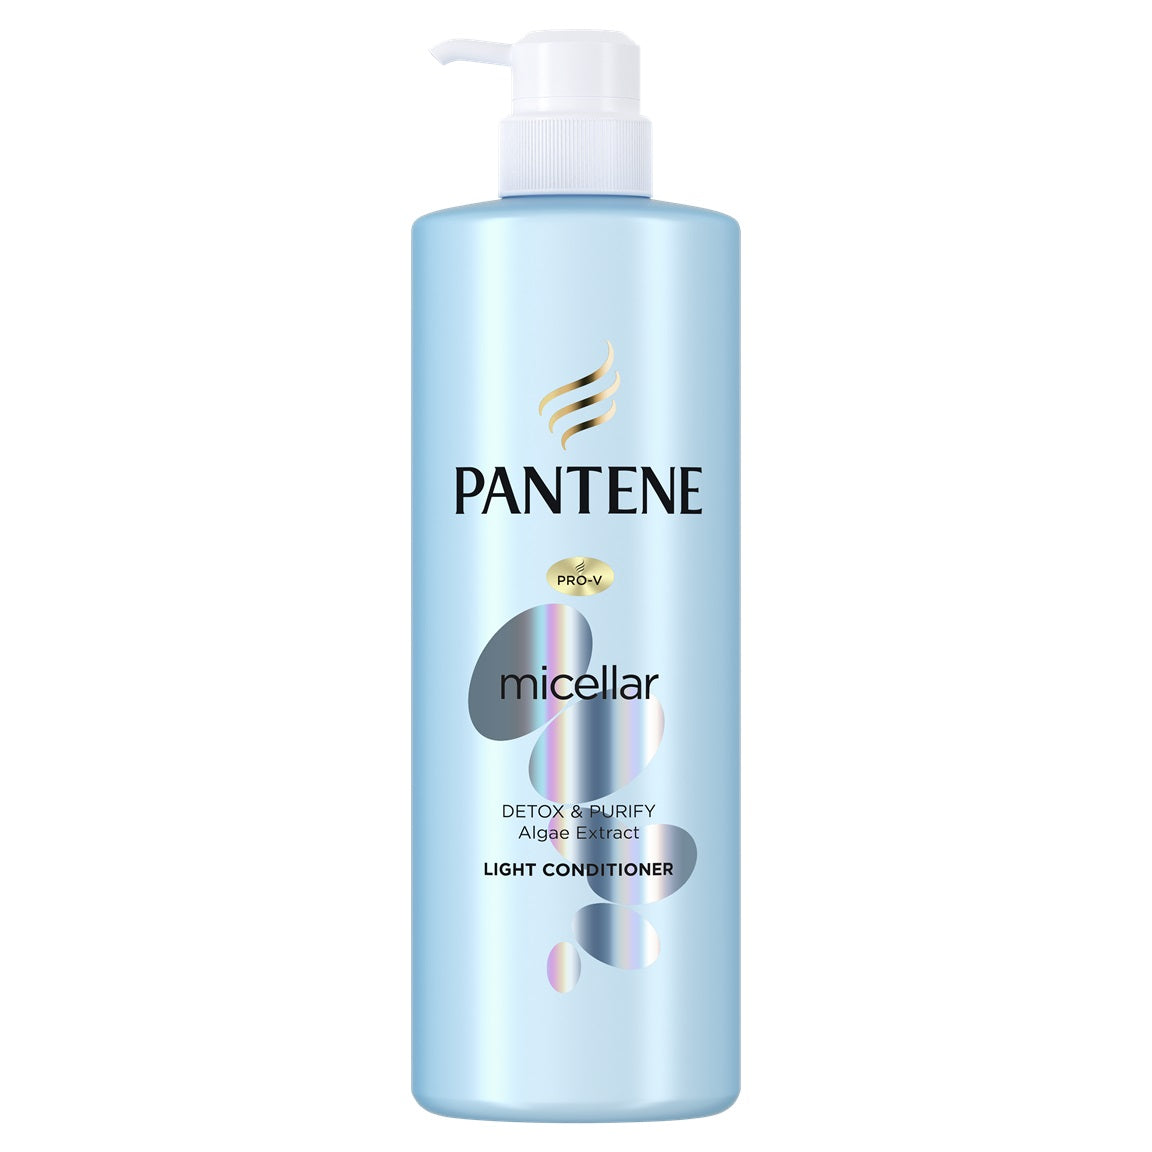 Pantene Pro-V Shampoo Micellar Detox & Purify Algae Extract - 300Ml - Highfy.pk